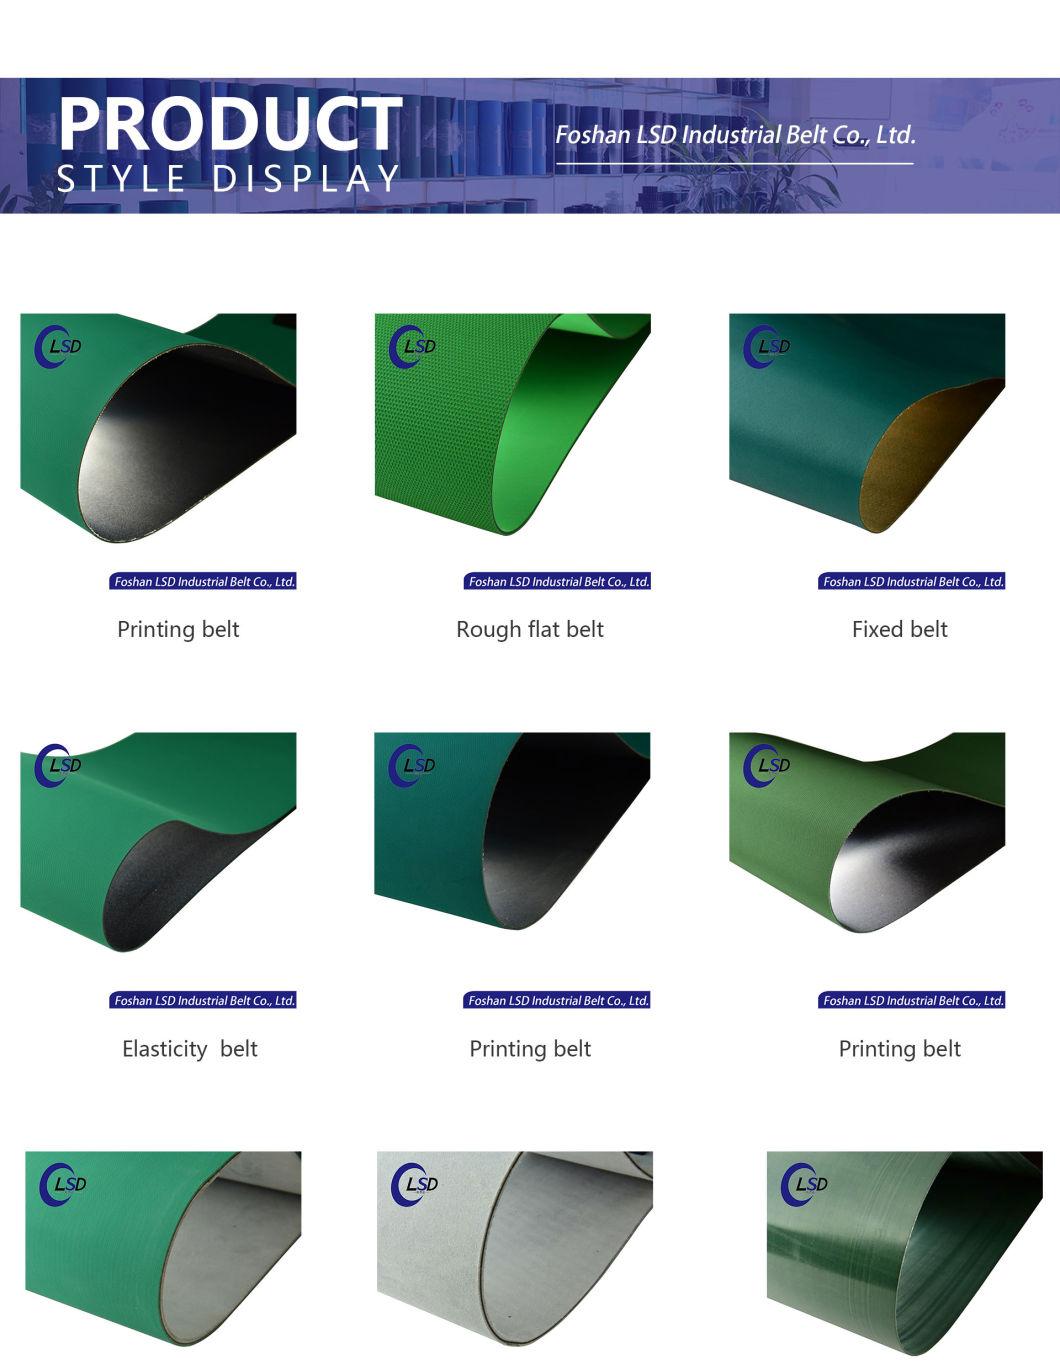 Customized 3mm Thickness Green Anti-Static PVC Flat Transmission Belt